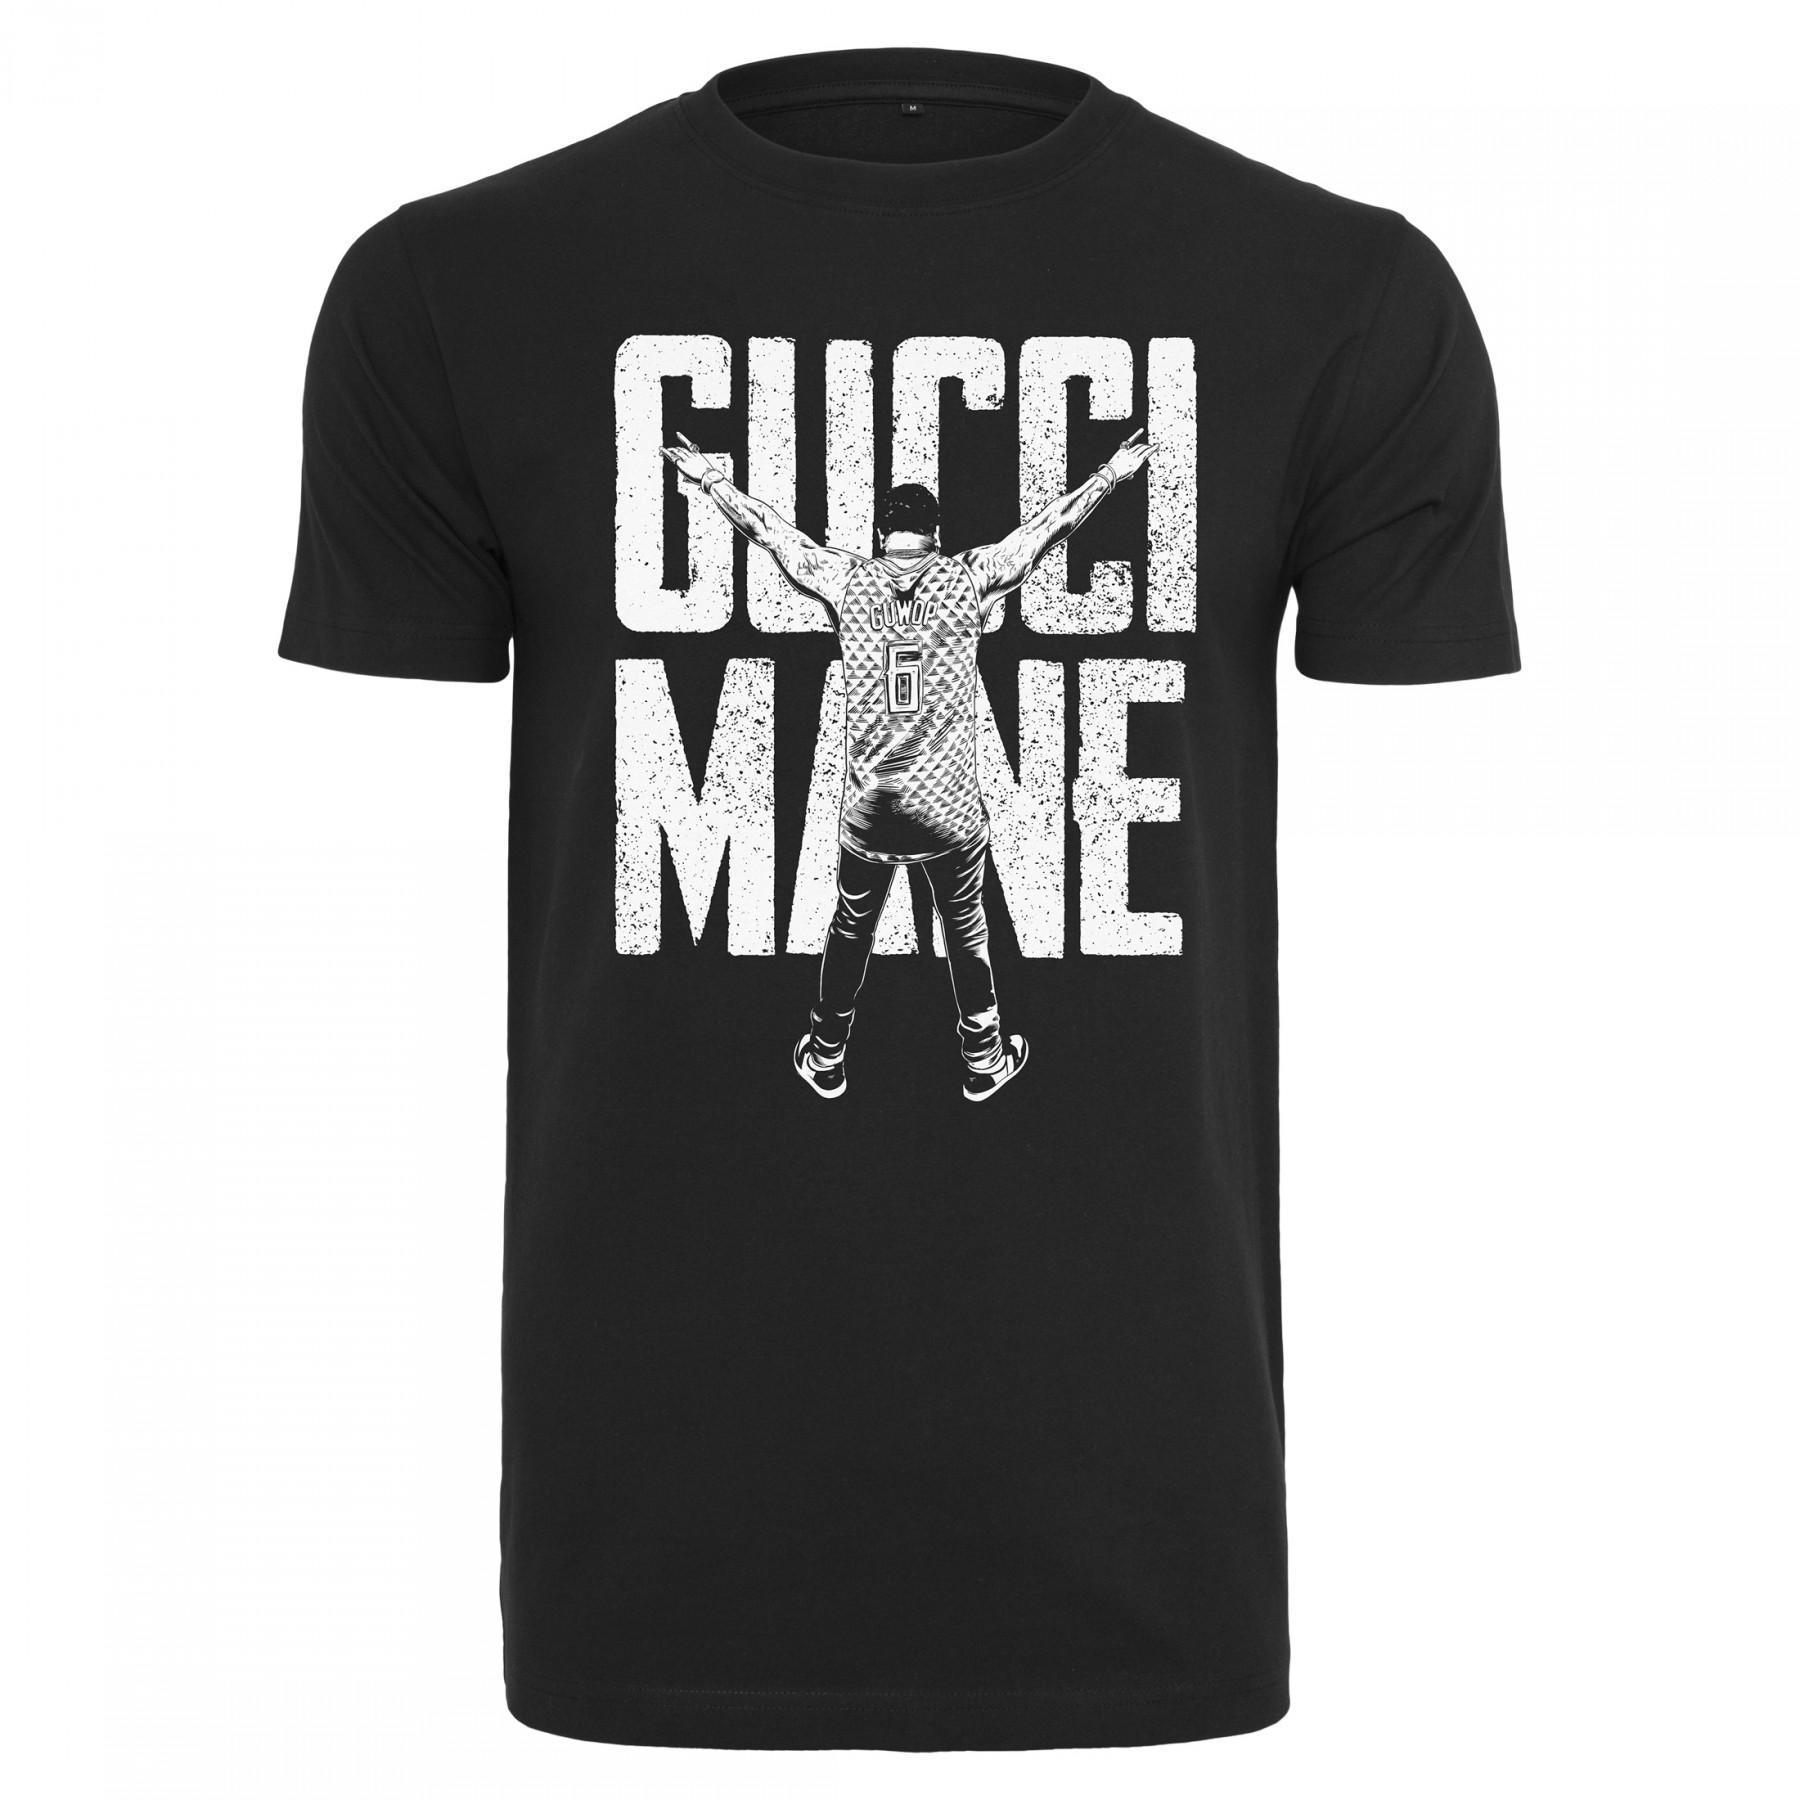 T-shirt urban classic gucci mane guwop tance gt